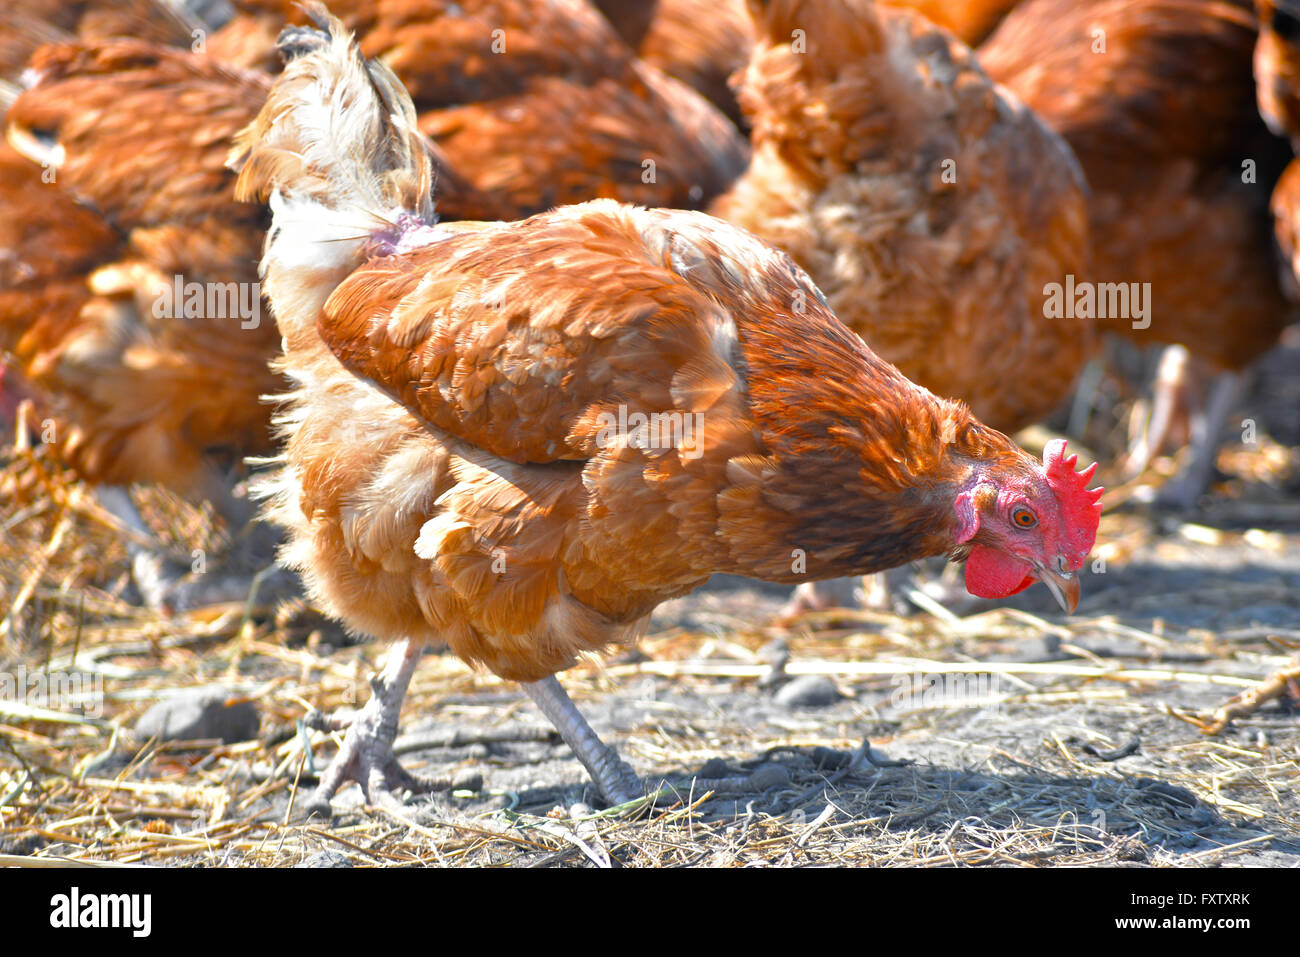 Pollos de rango libre tradicional granja avícola. Foto de stock